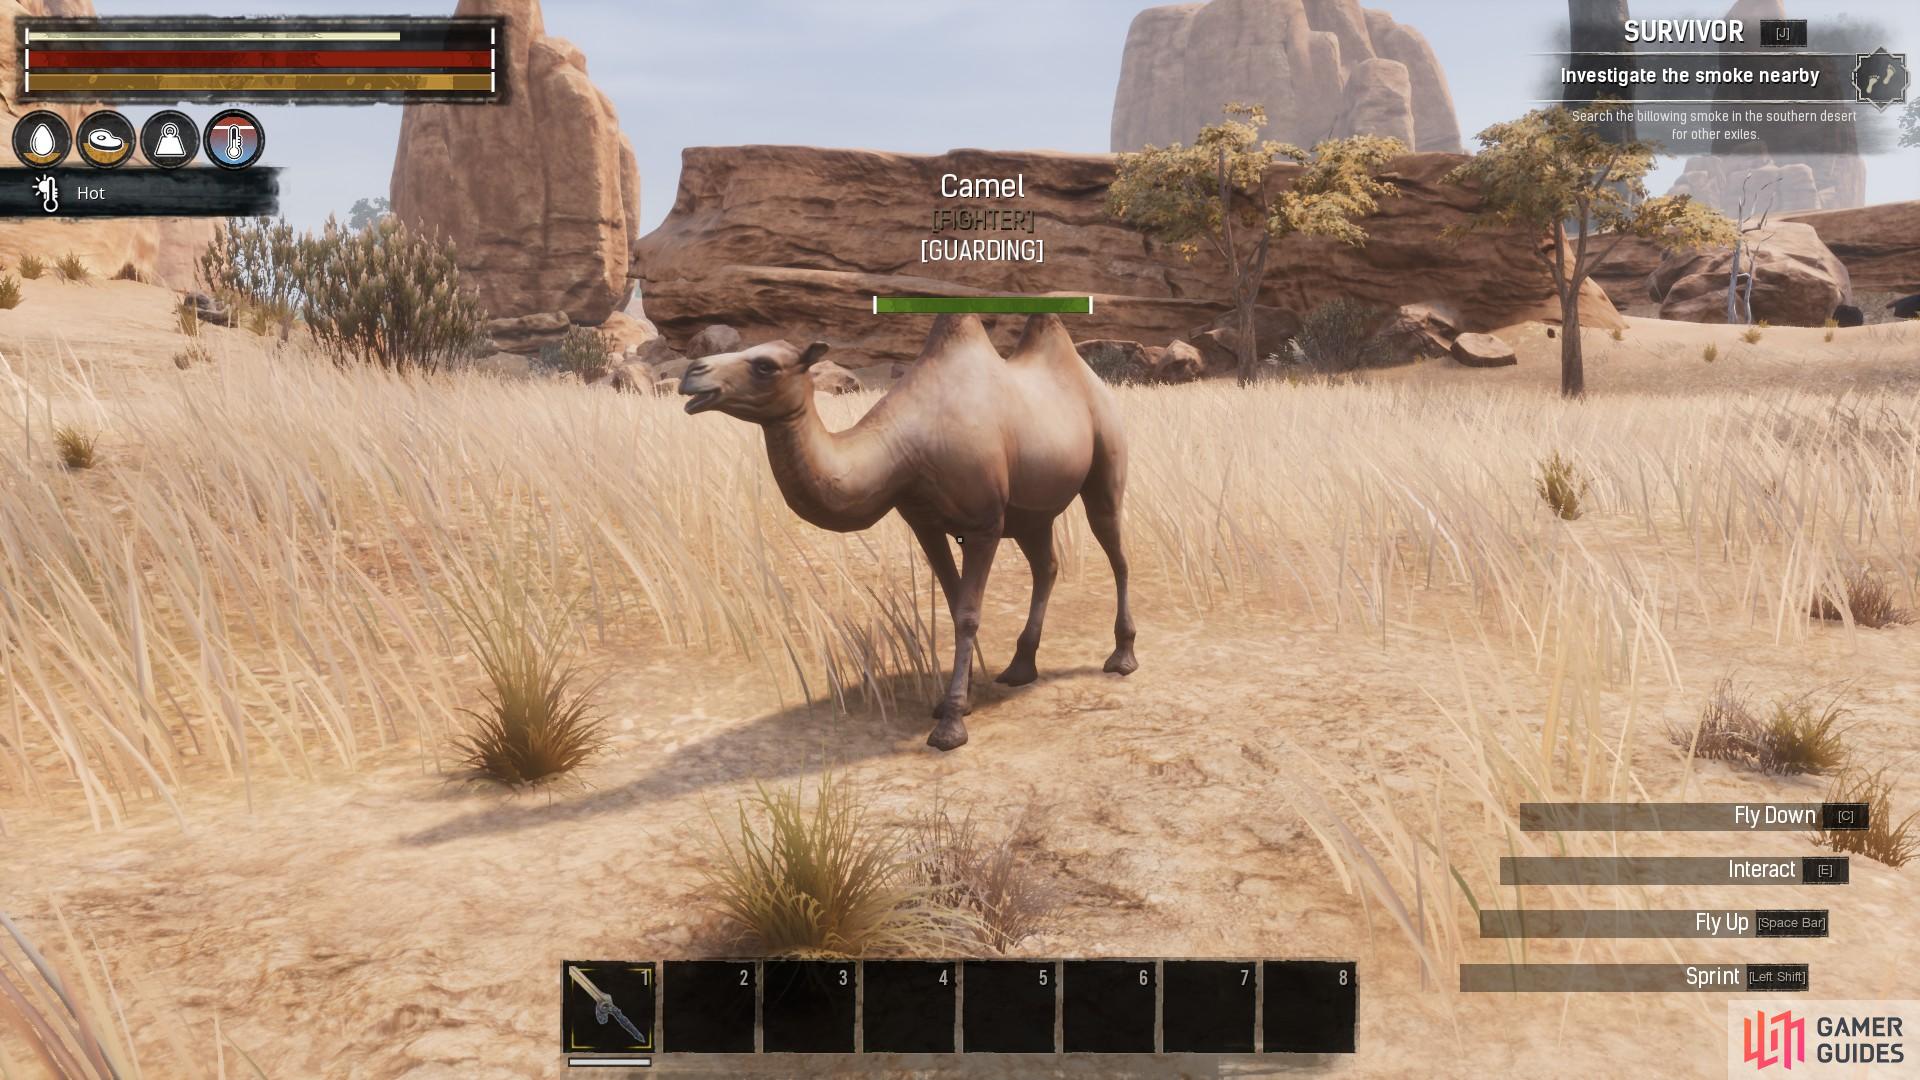 A Pet Camel can follow along behind you carrying items.